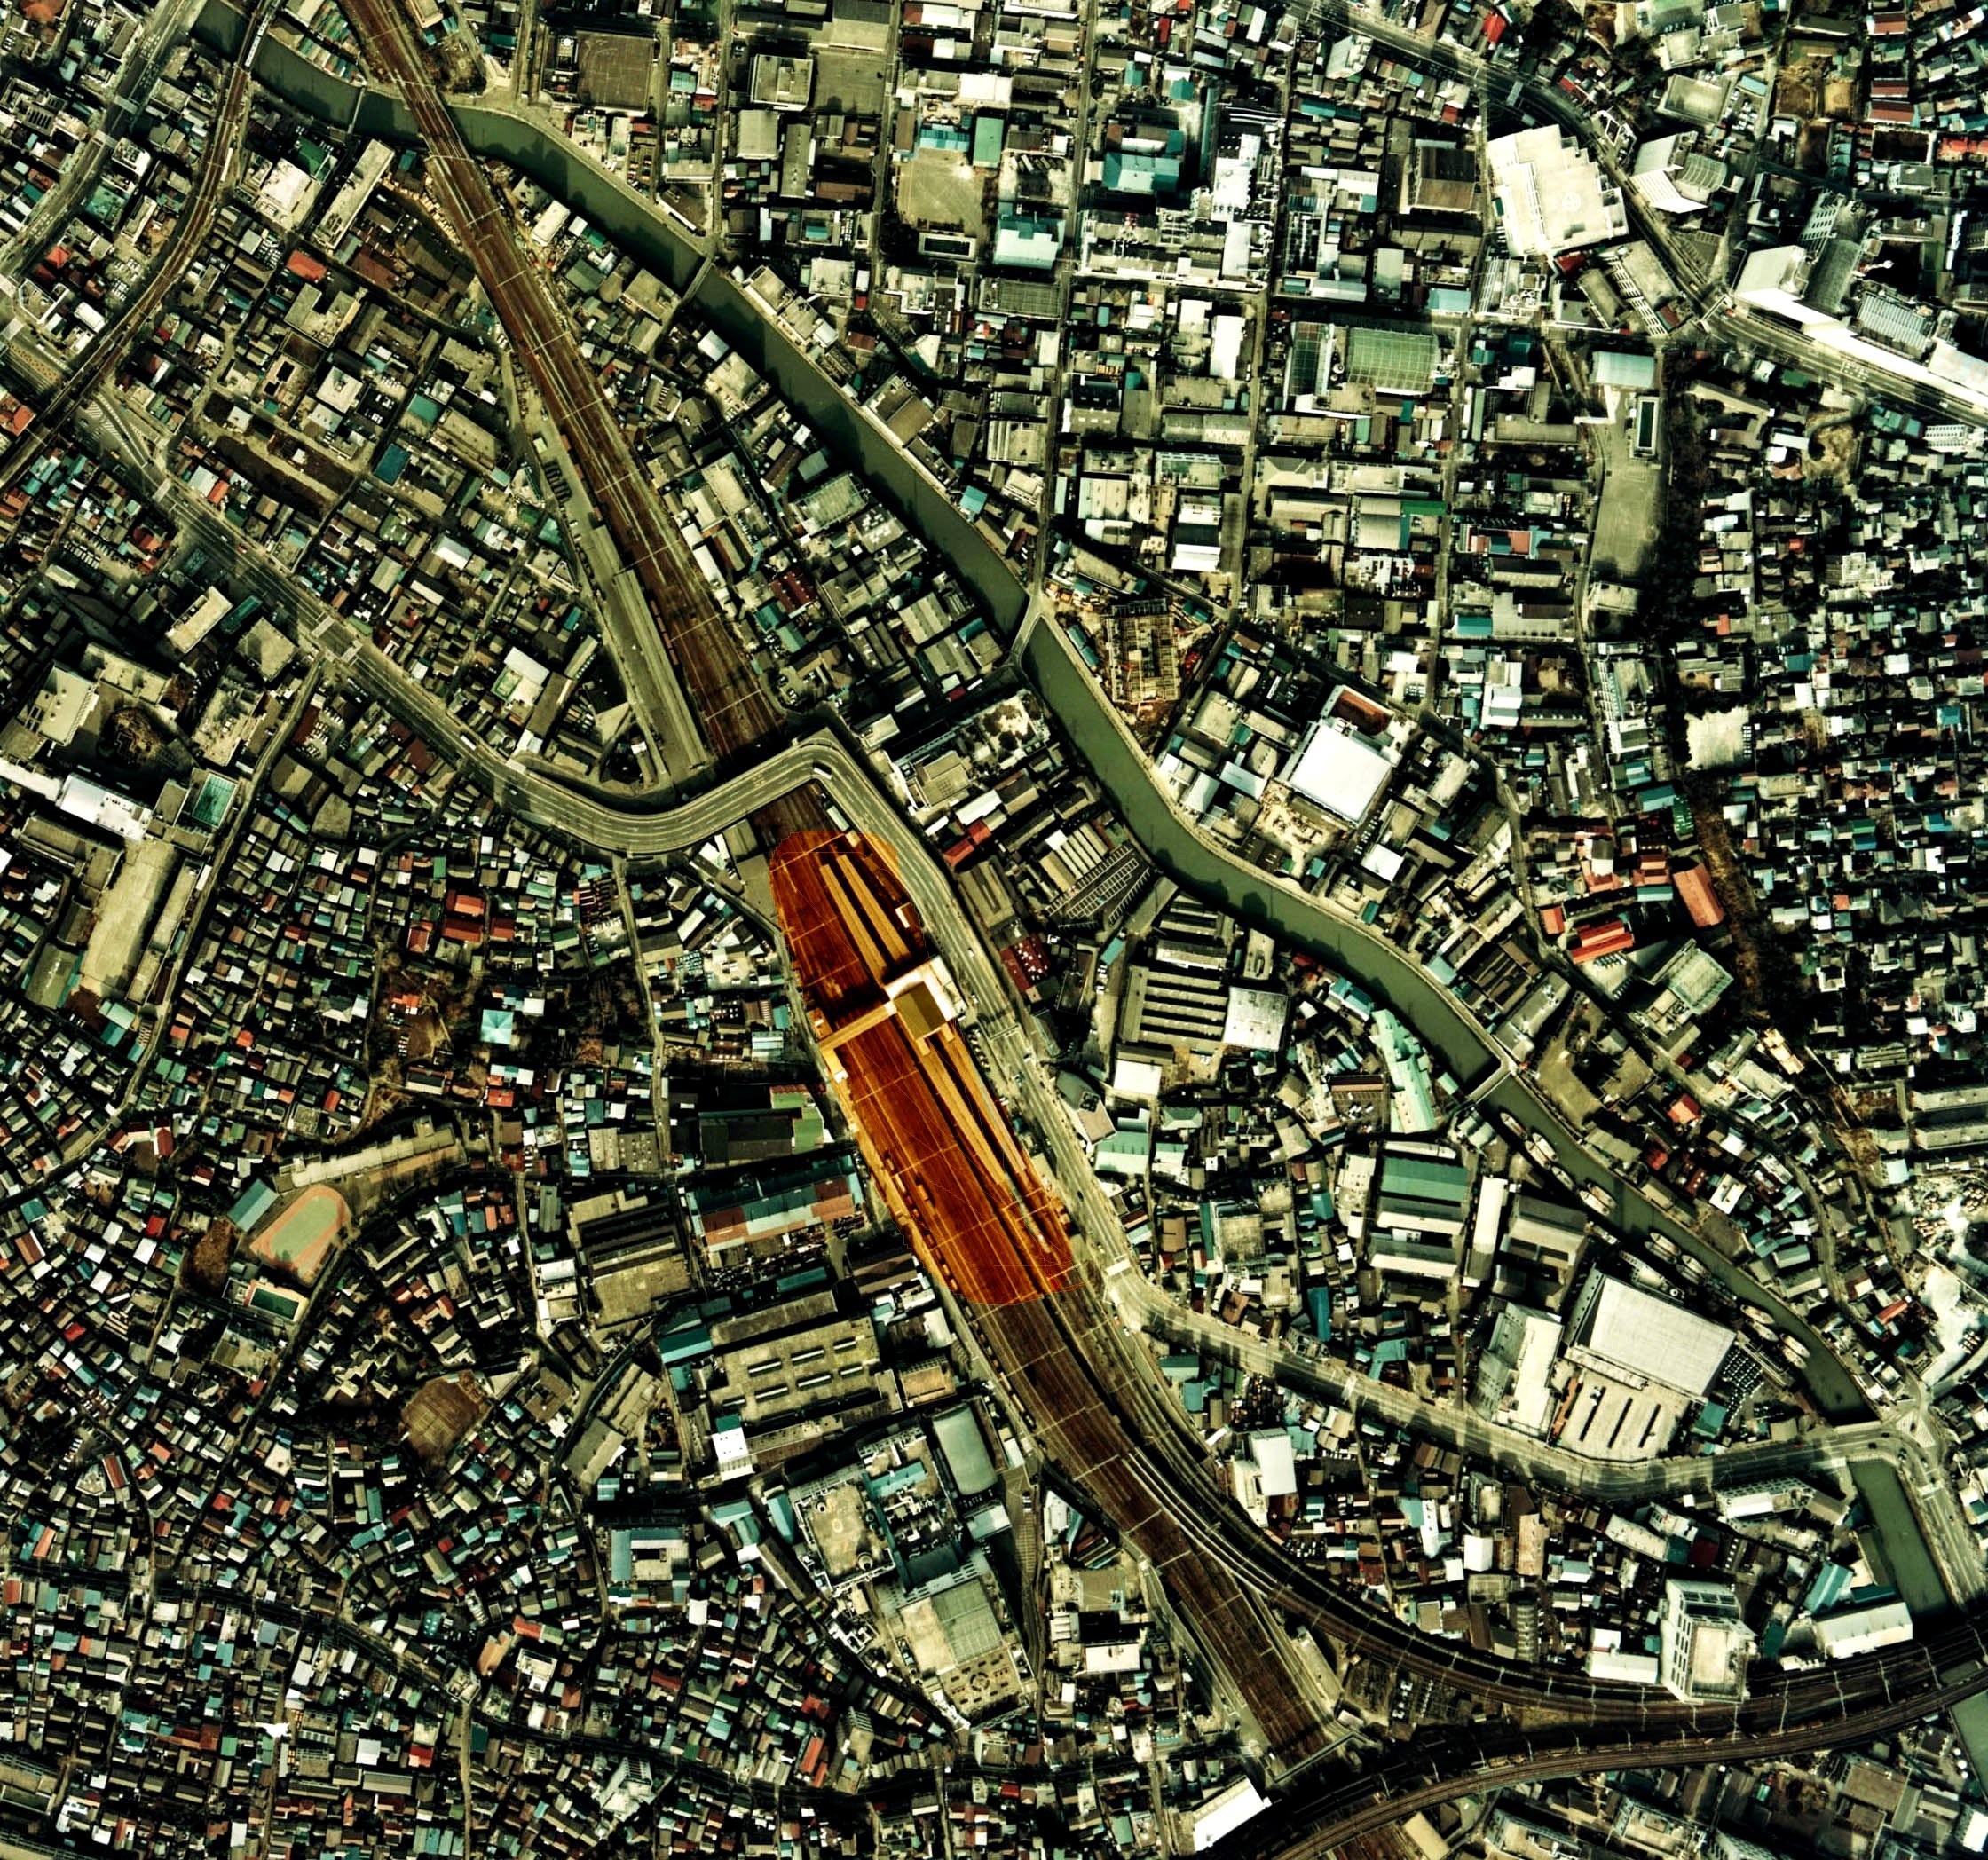 Ohsaki station 1974 aerial